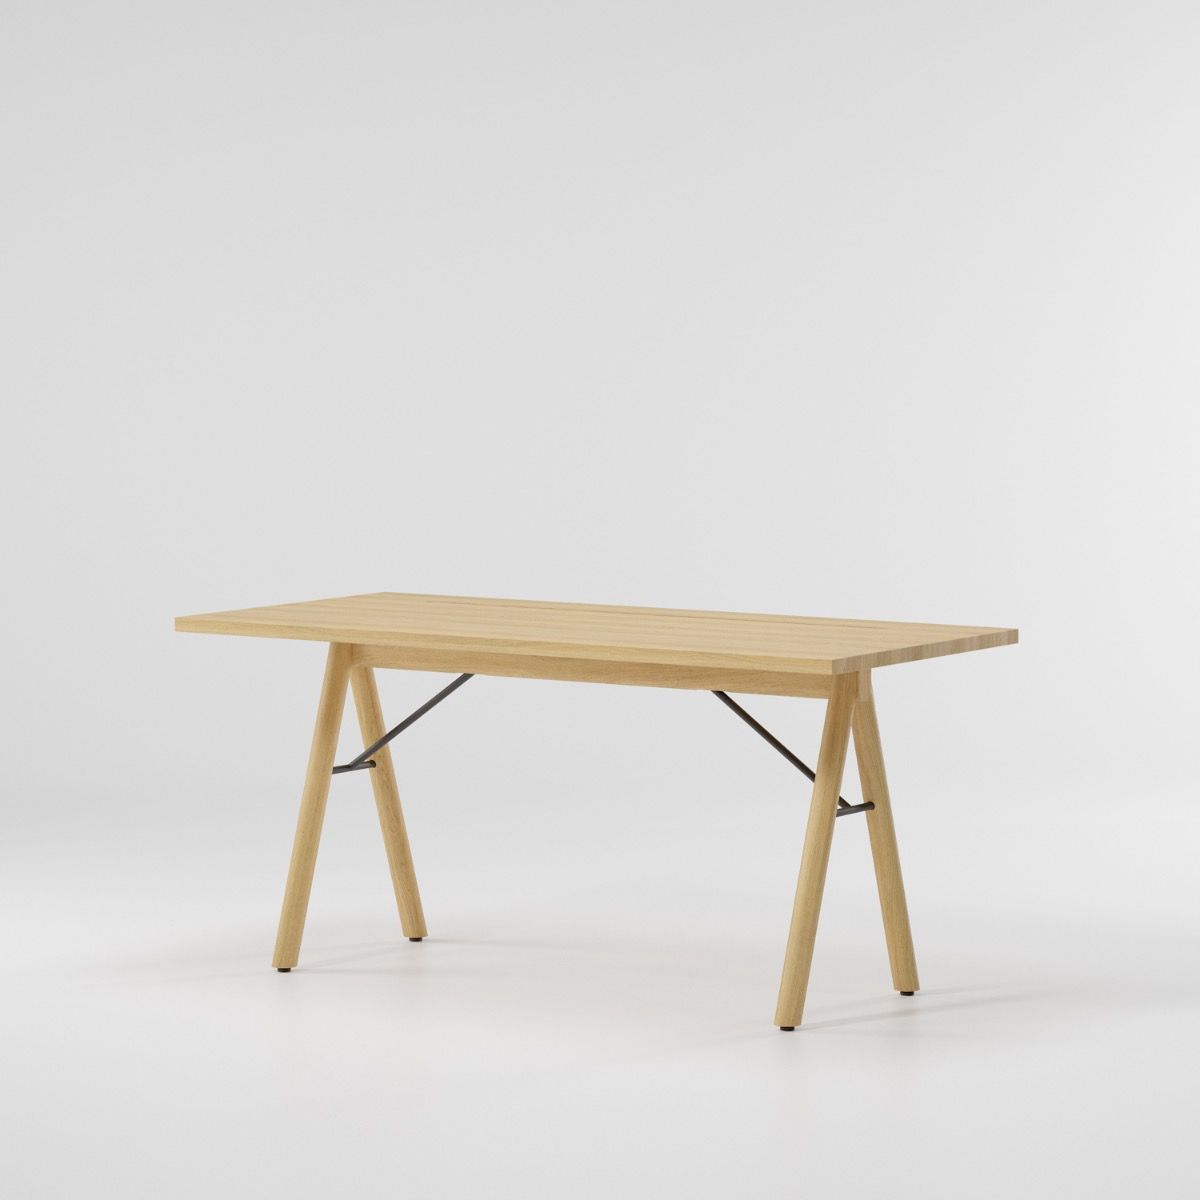 A Desk table 1600 x 750